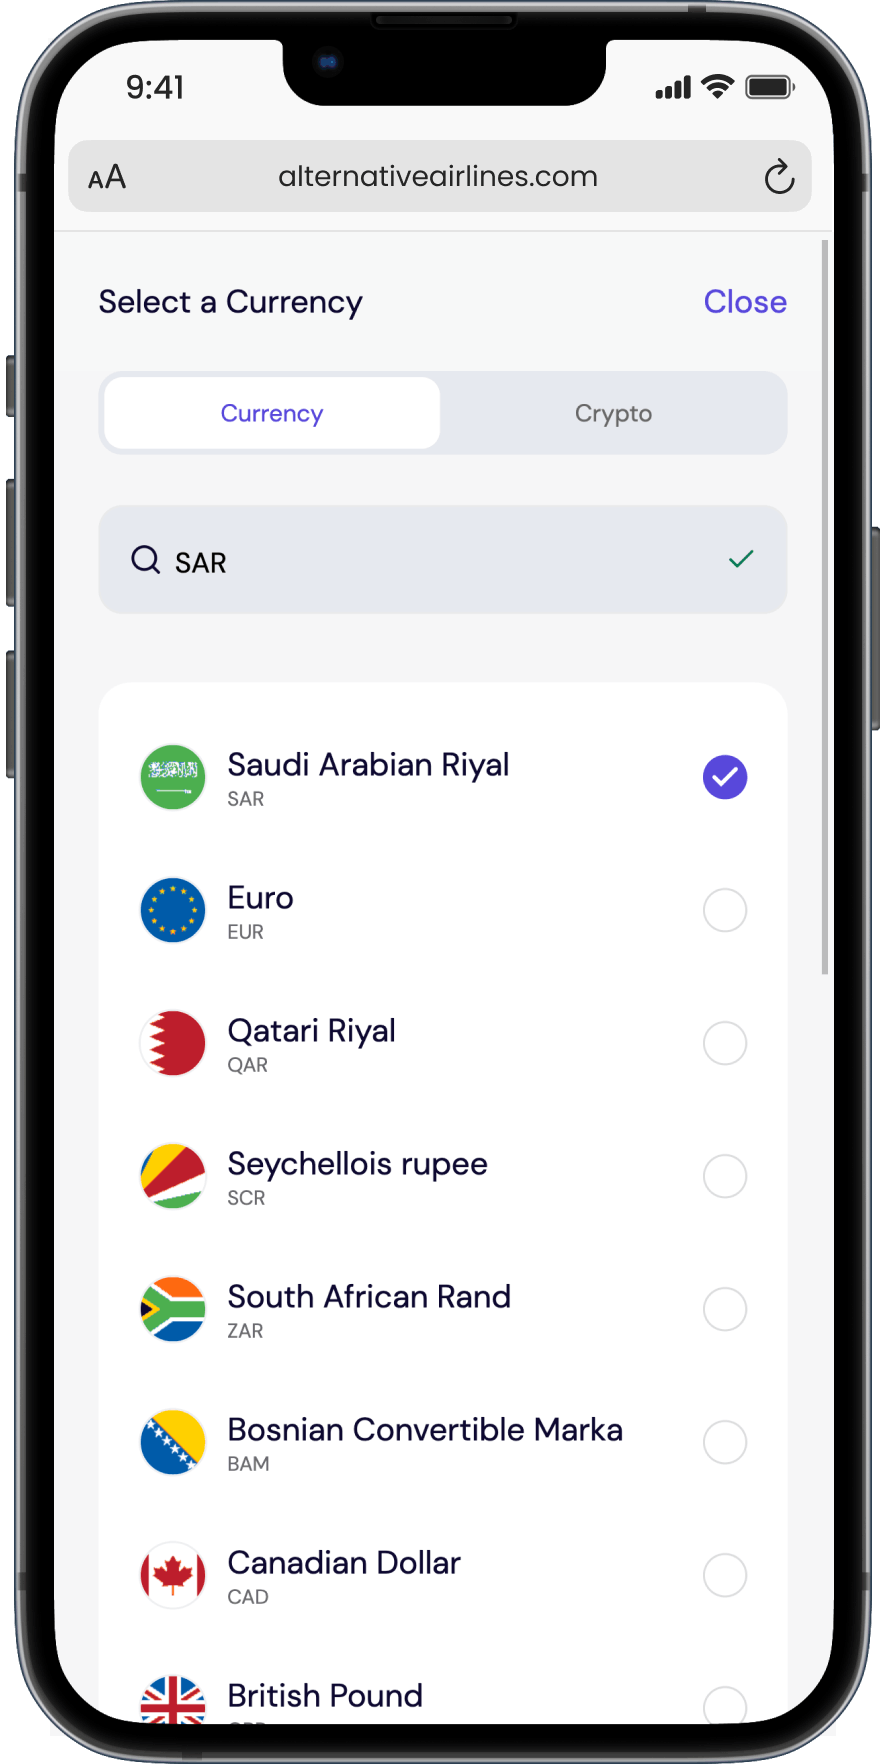 Step 3 - Search for 'SAR' and select Saudi Arabian Riyal